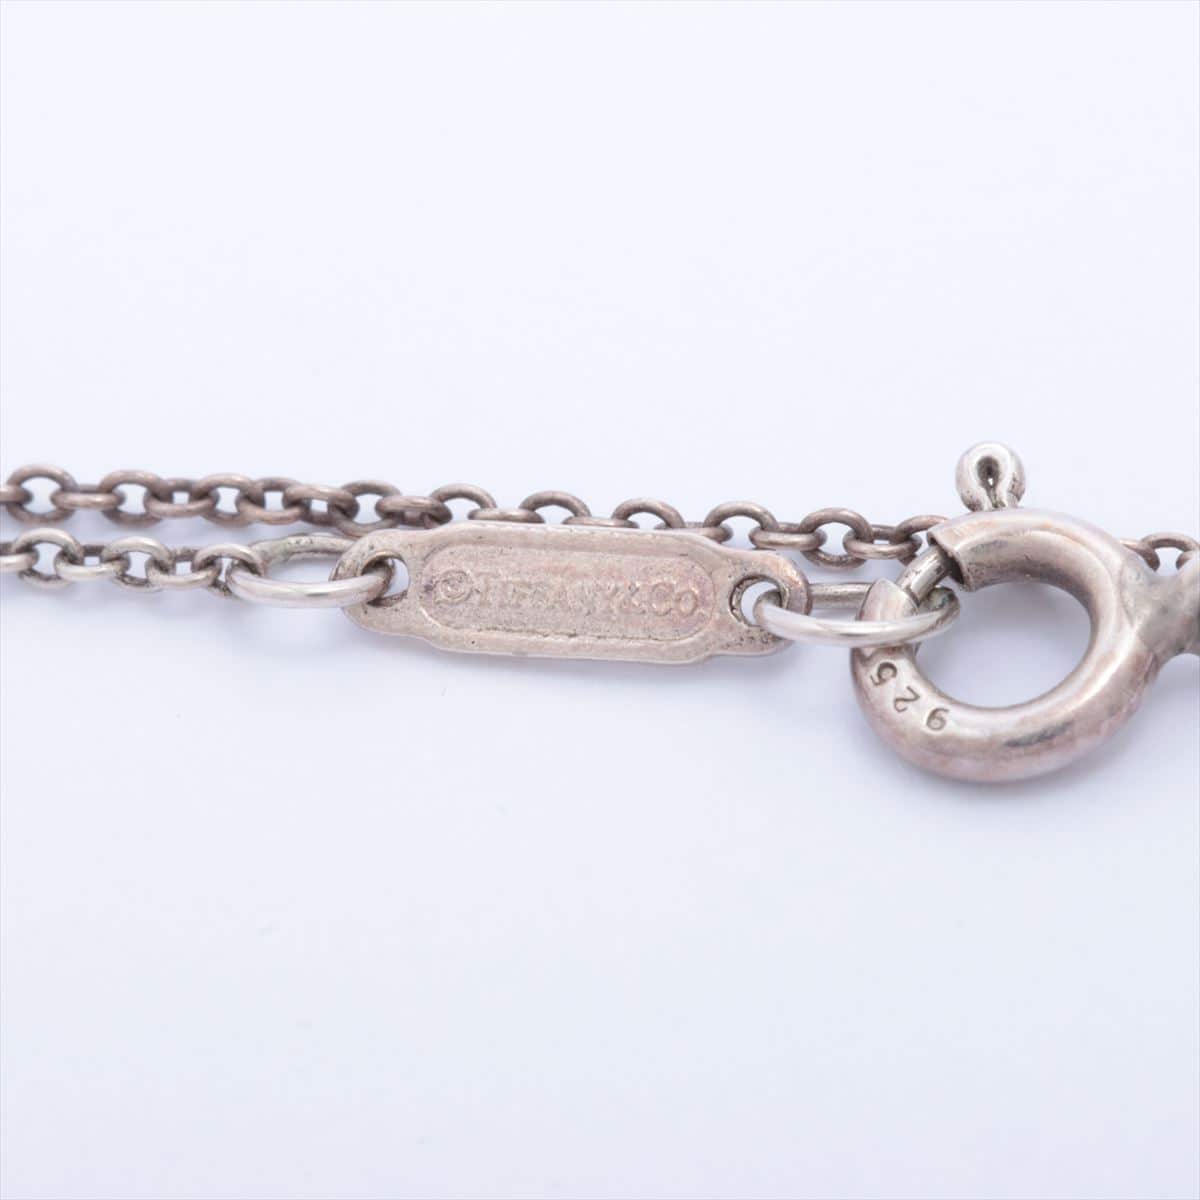 Tiffany 1837 Interlocking Circle Necklace 925 4.2g Silver